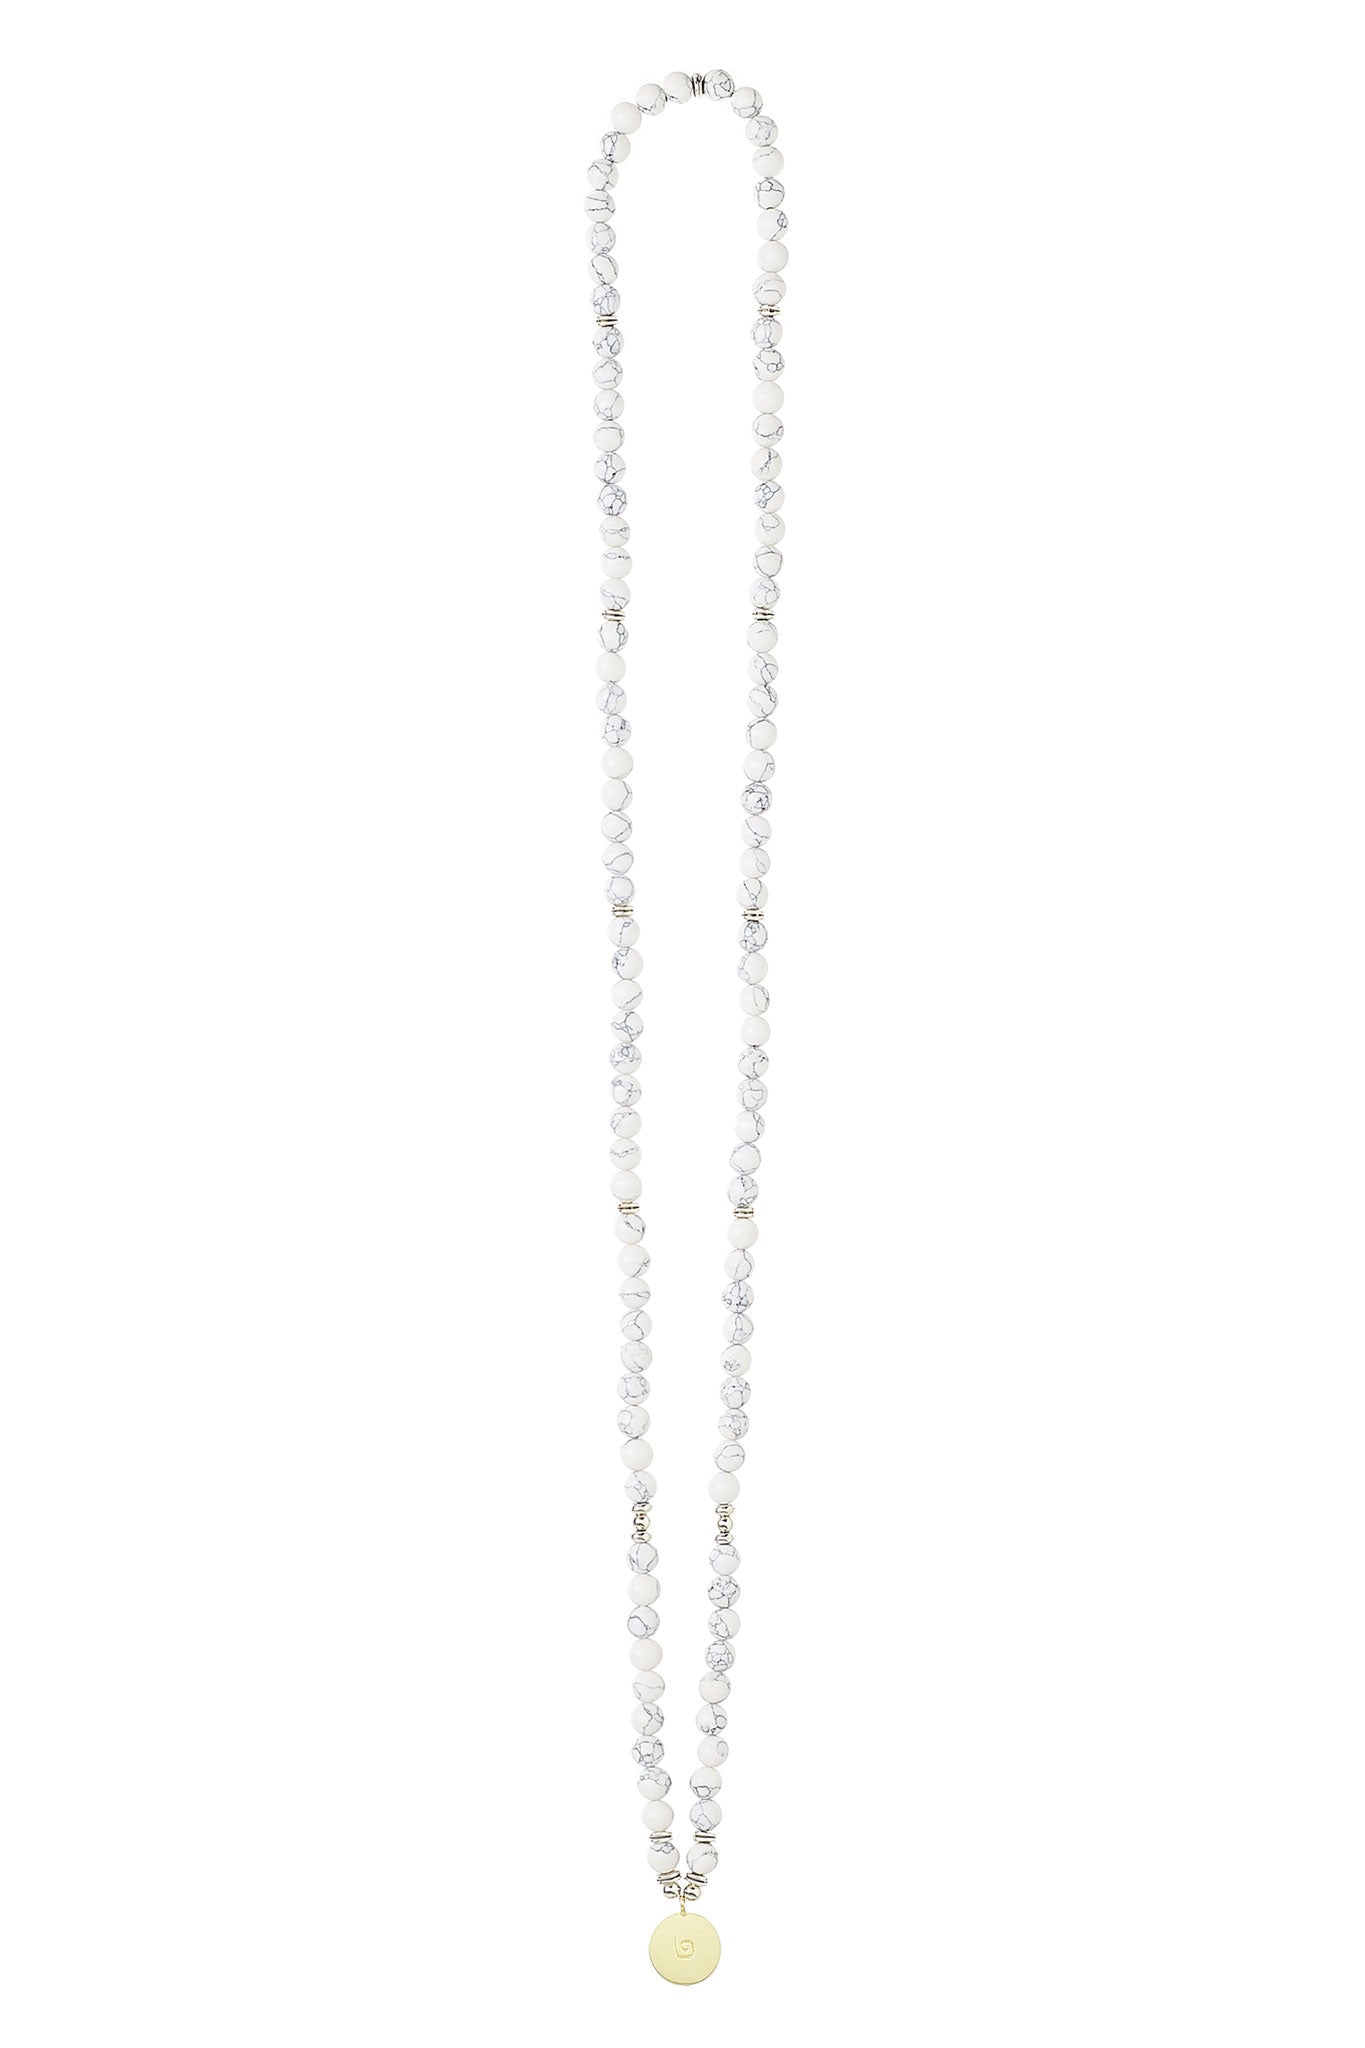 Kavyx Mala Necklace Jewelry in White - Elegant and Stylish Fashion Accessory.